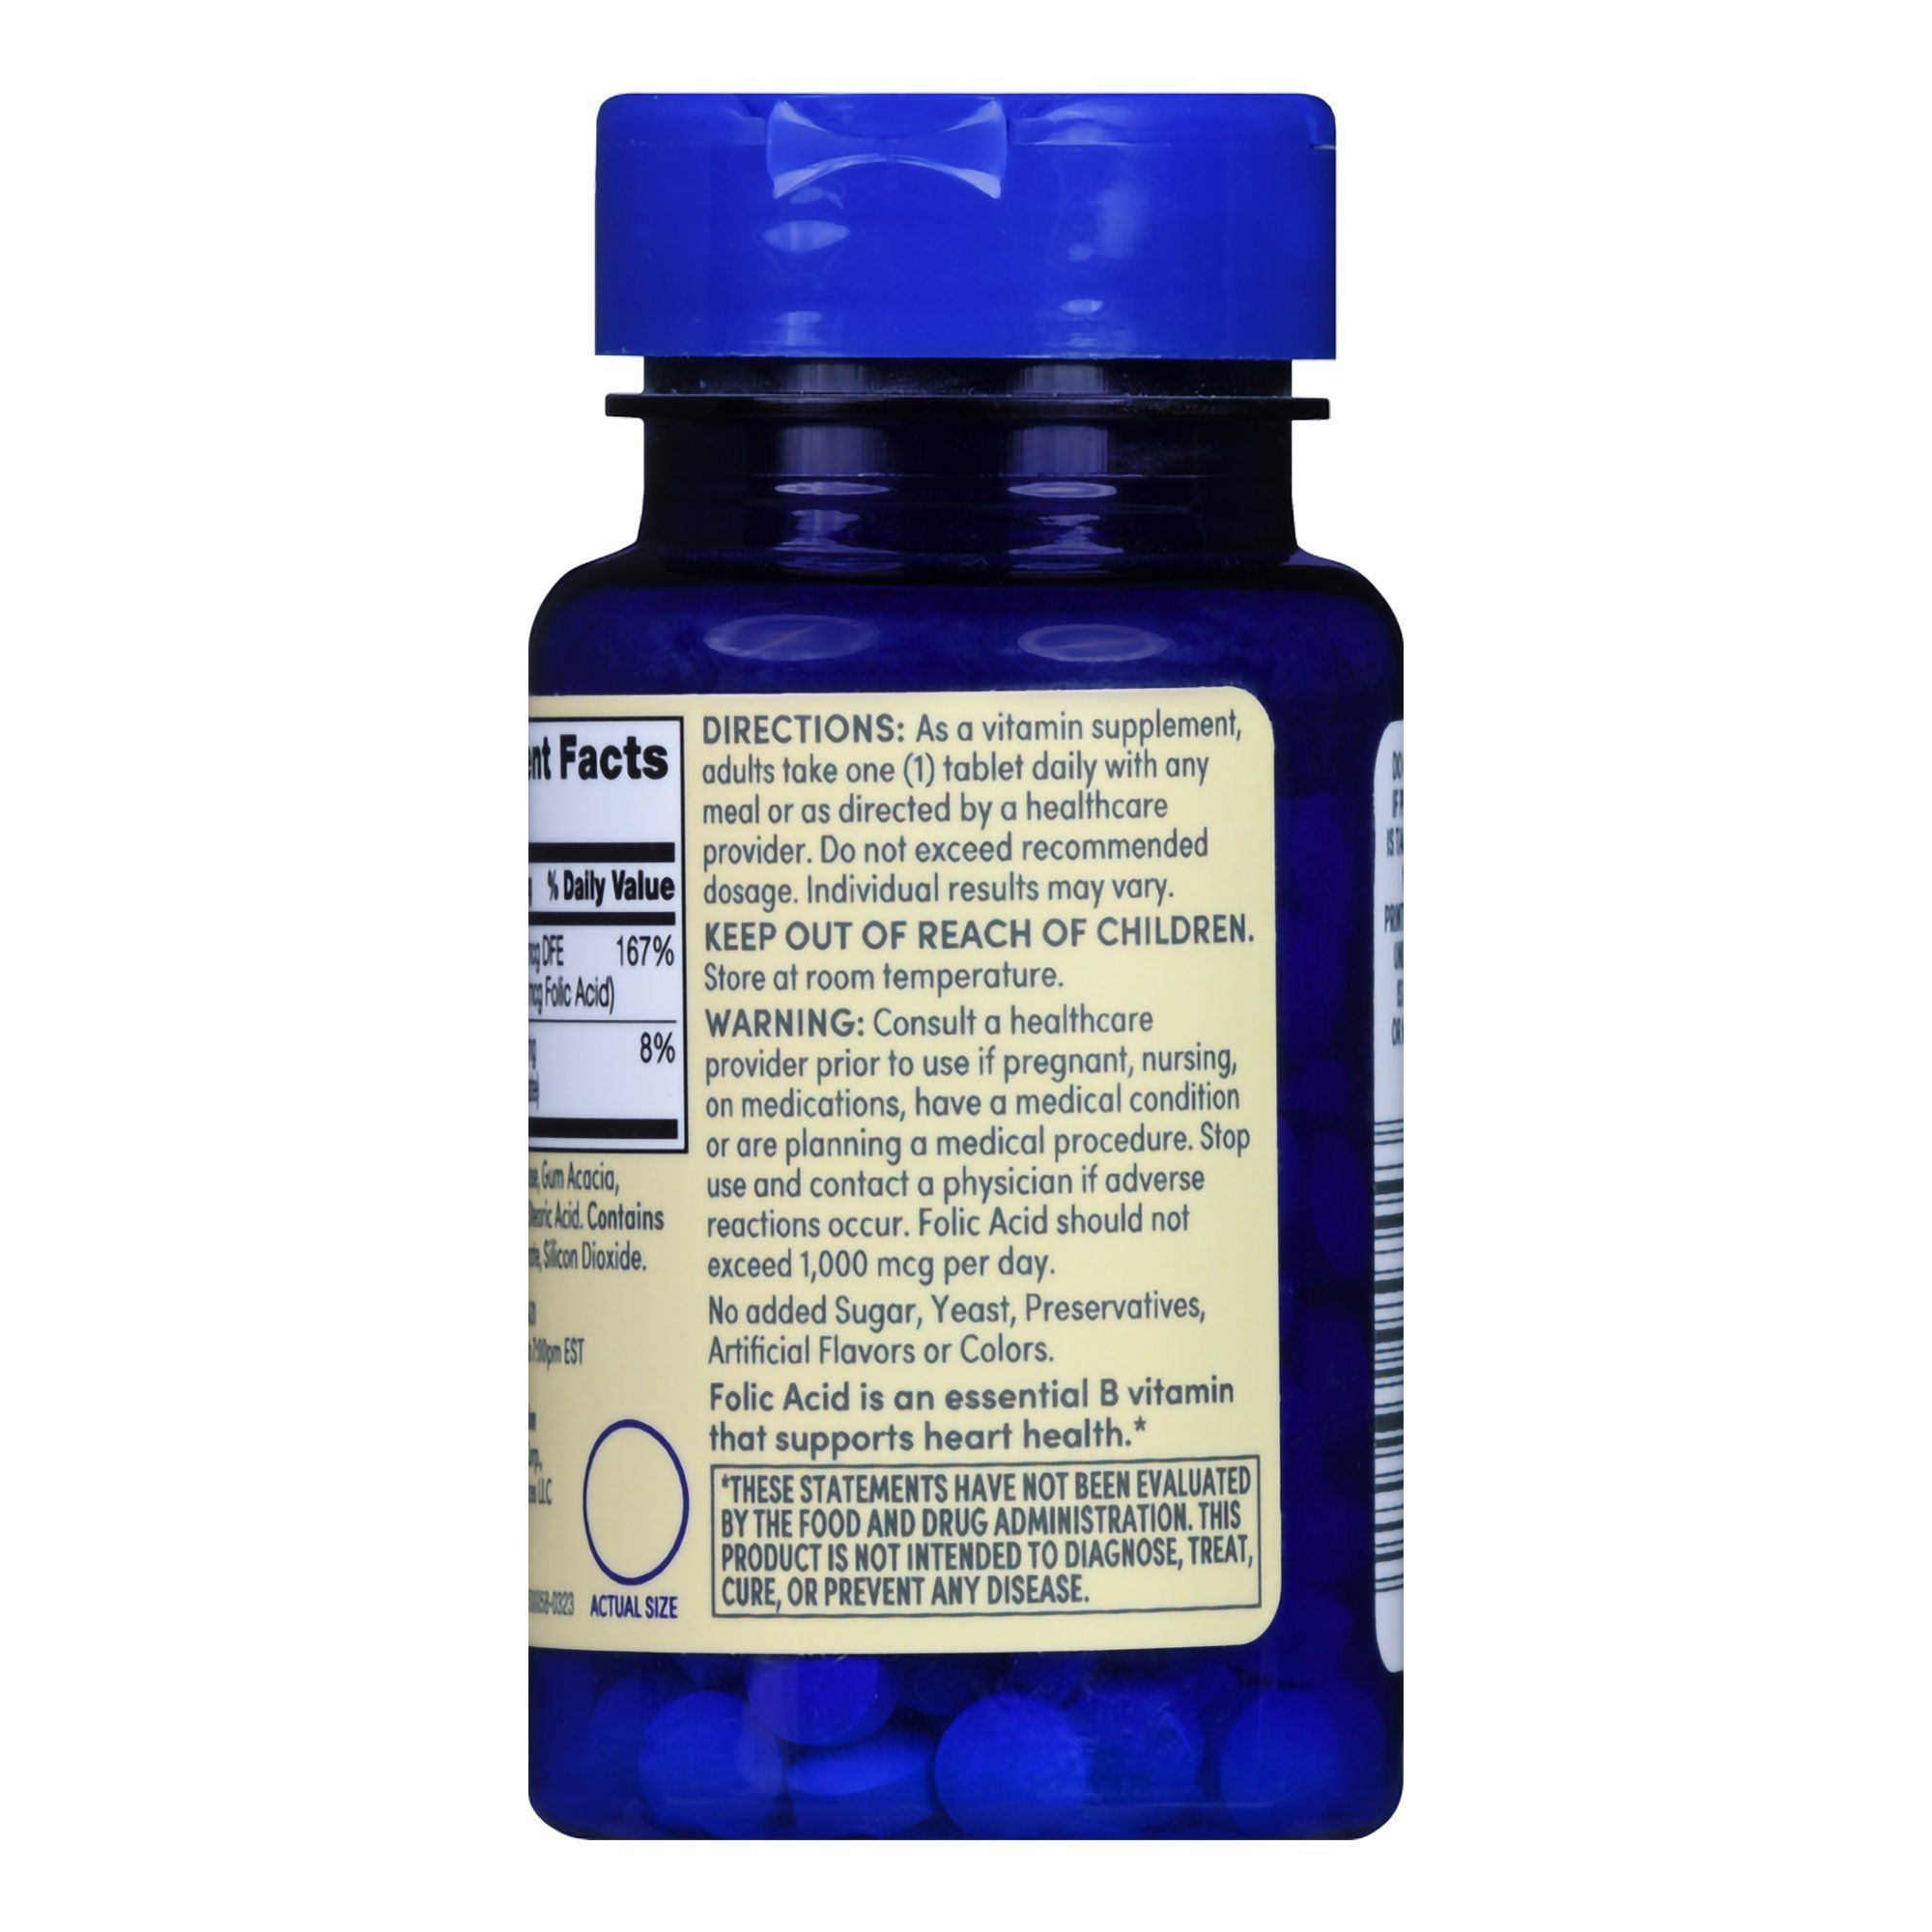 Foster & Thrive Folic Acid Tablets,  400 mcg -  250 ct